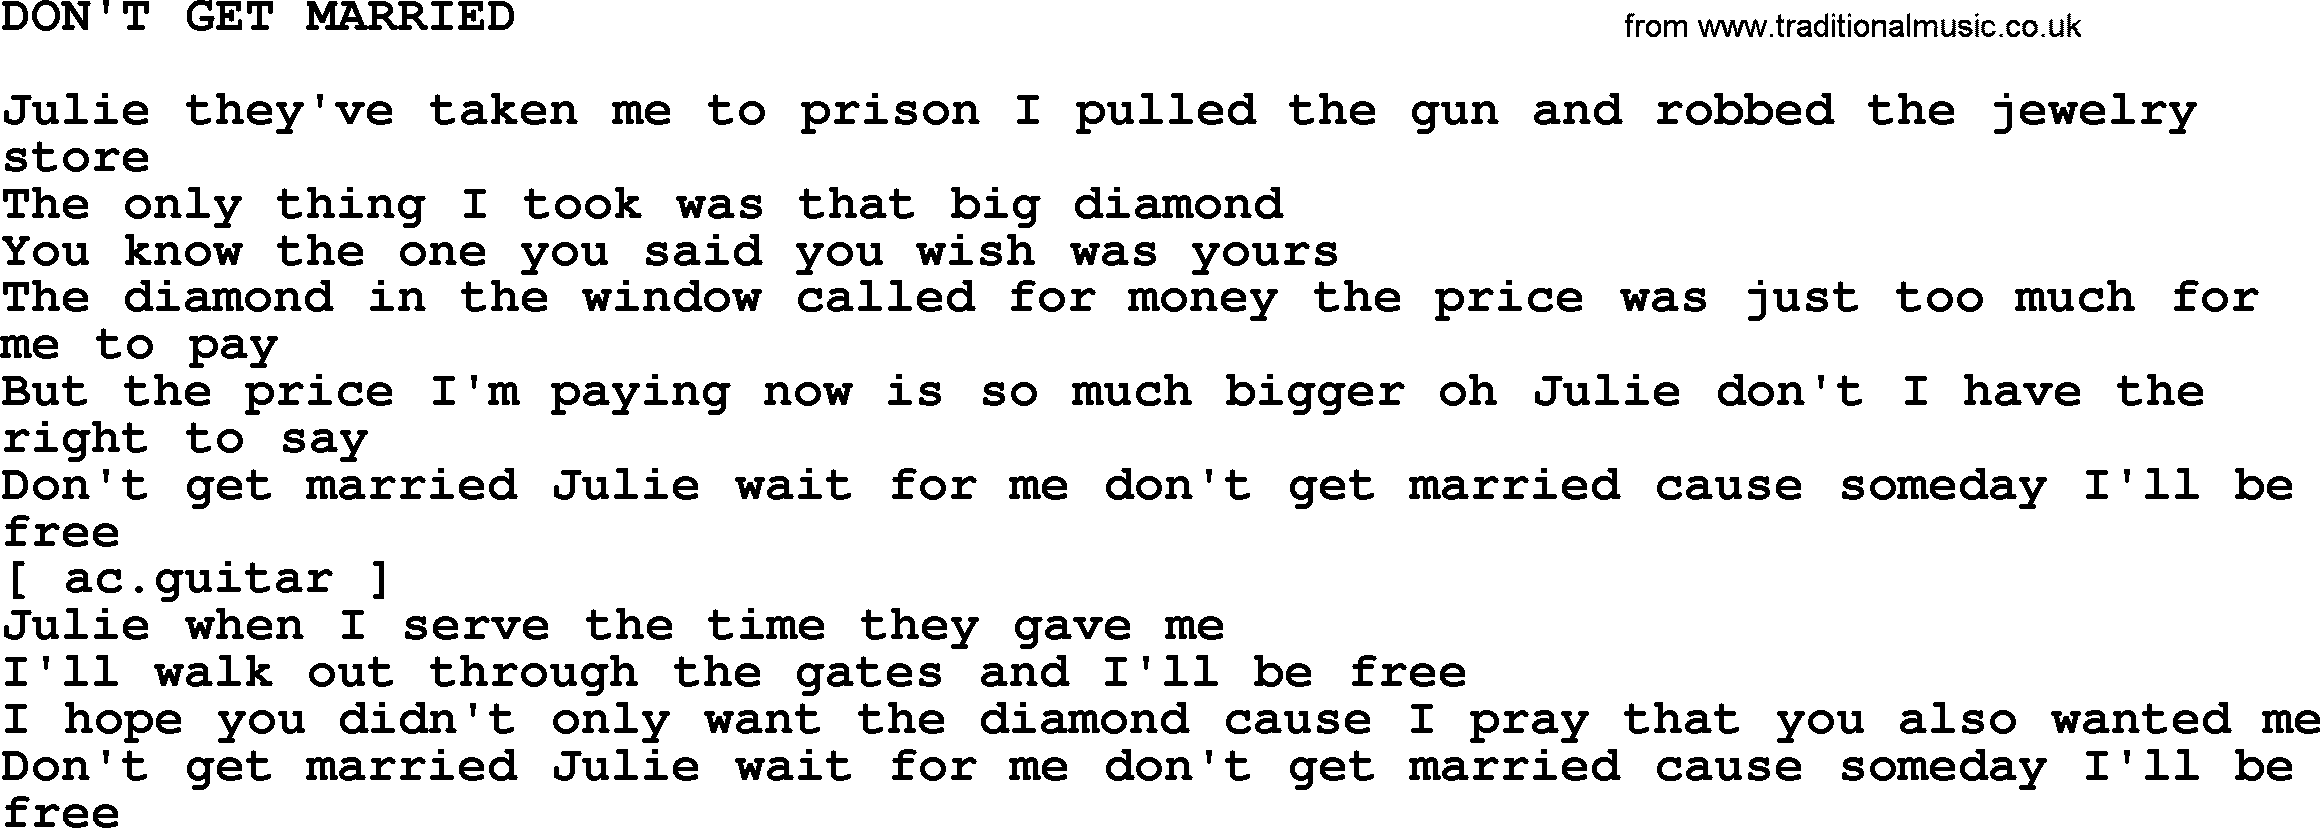 Merle Haggard song: Don't Get Married, lyrics.